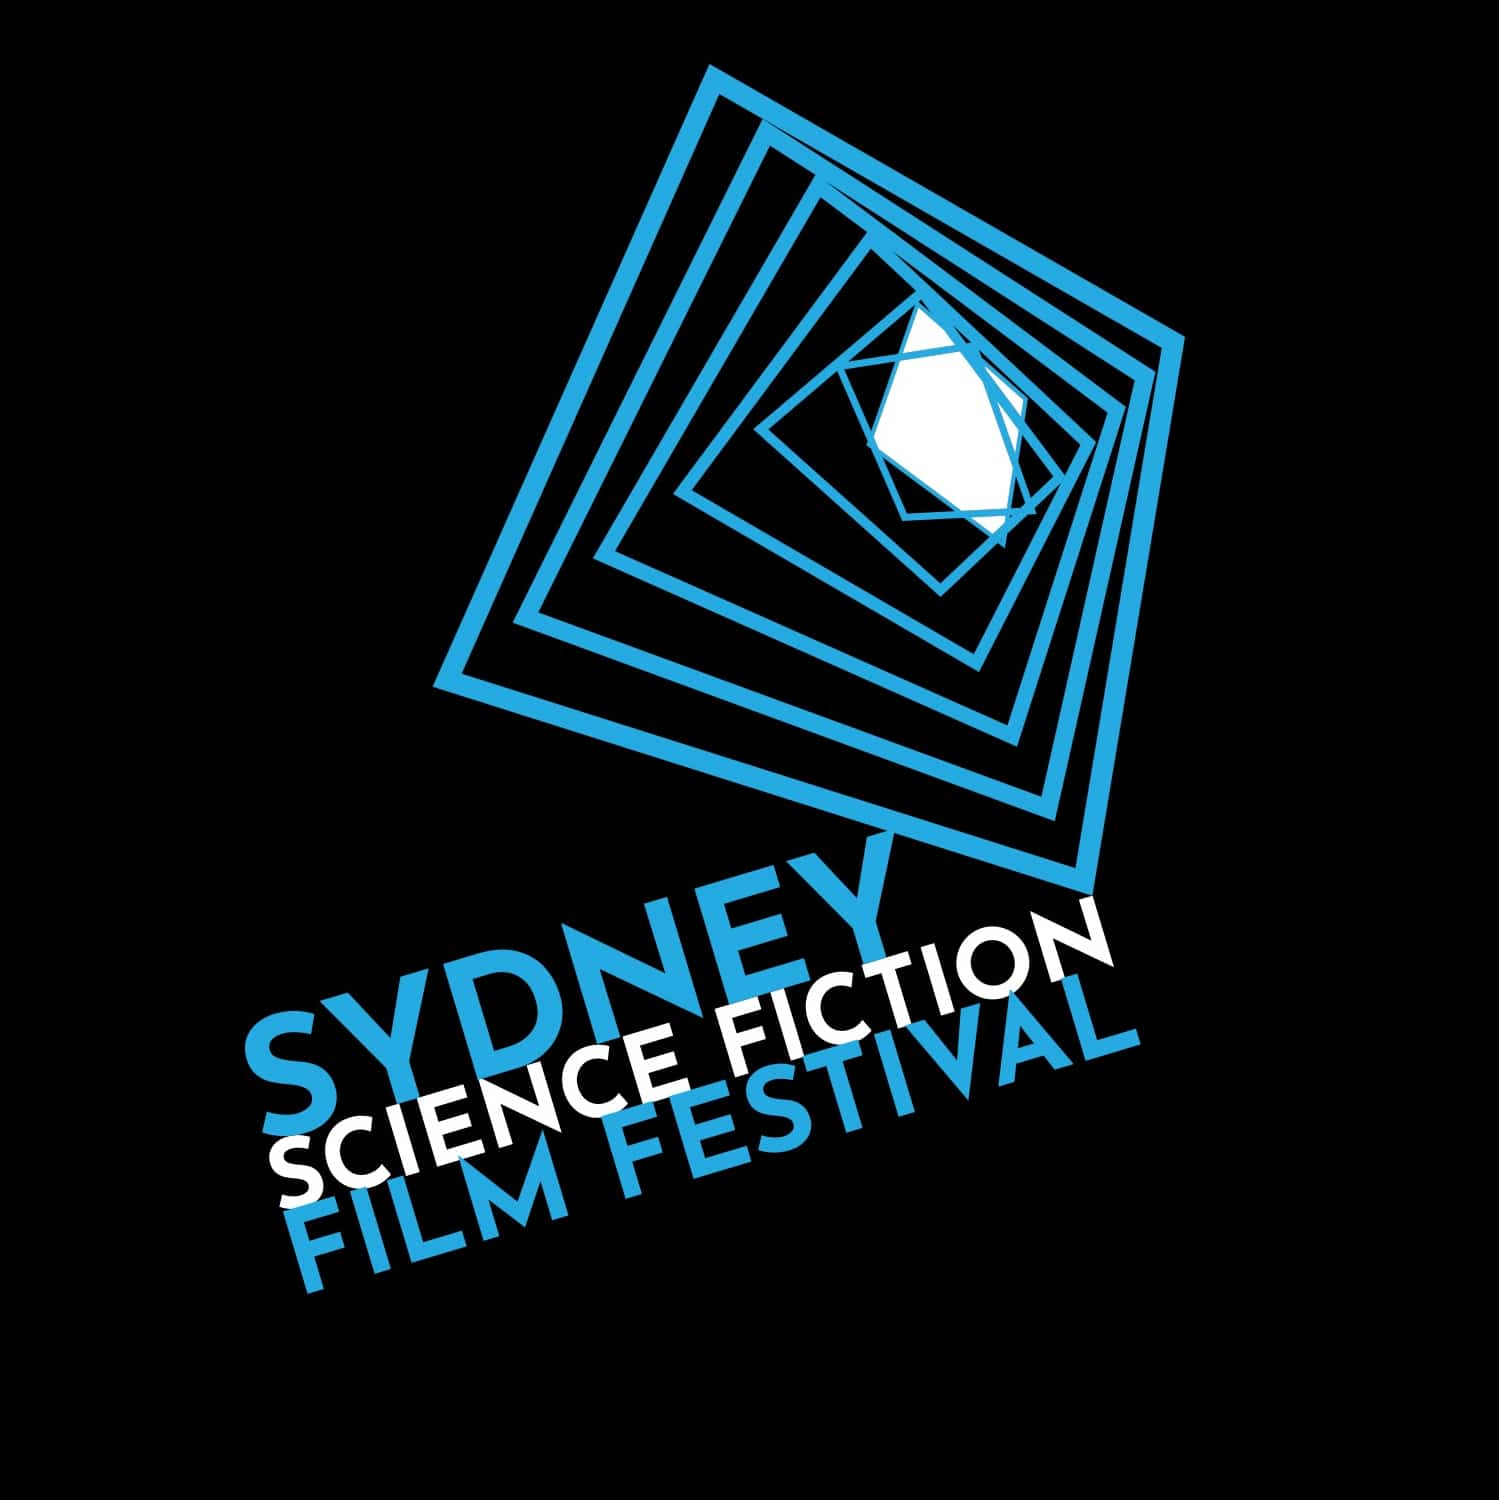 Sydney Science Fiction Film Festival